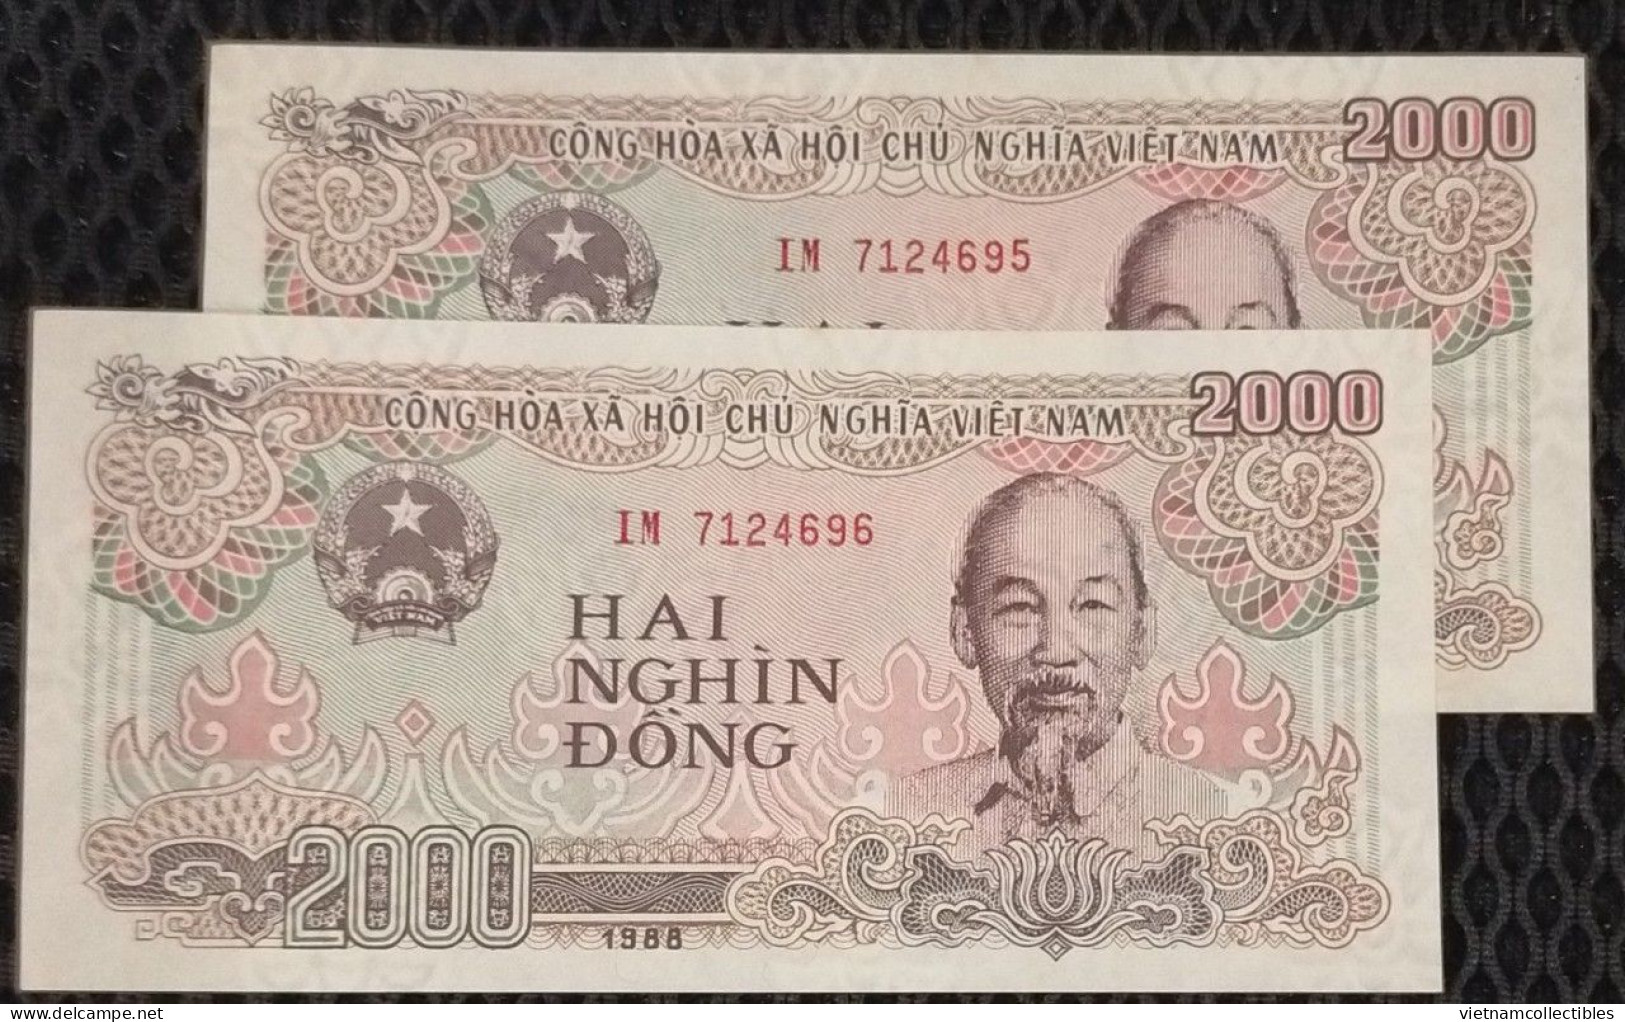 02 Viet Nam Vietnam 2000 2,000 Dong UNC Consecutive Banknote Notes 1988 Pick # 107a(2) - Vietnam